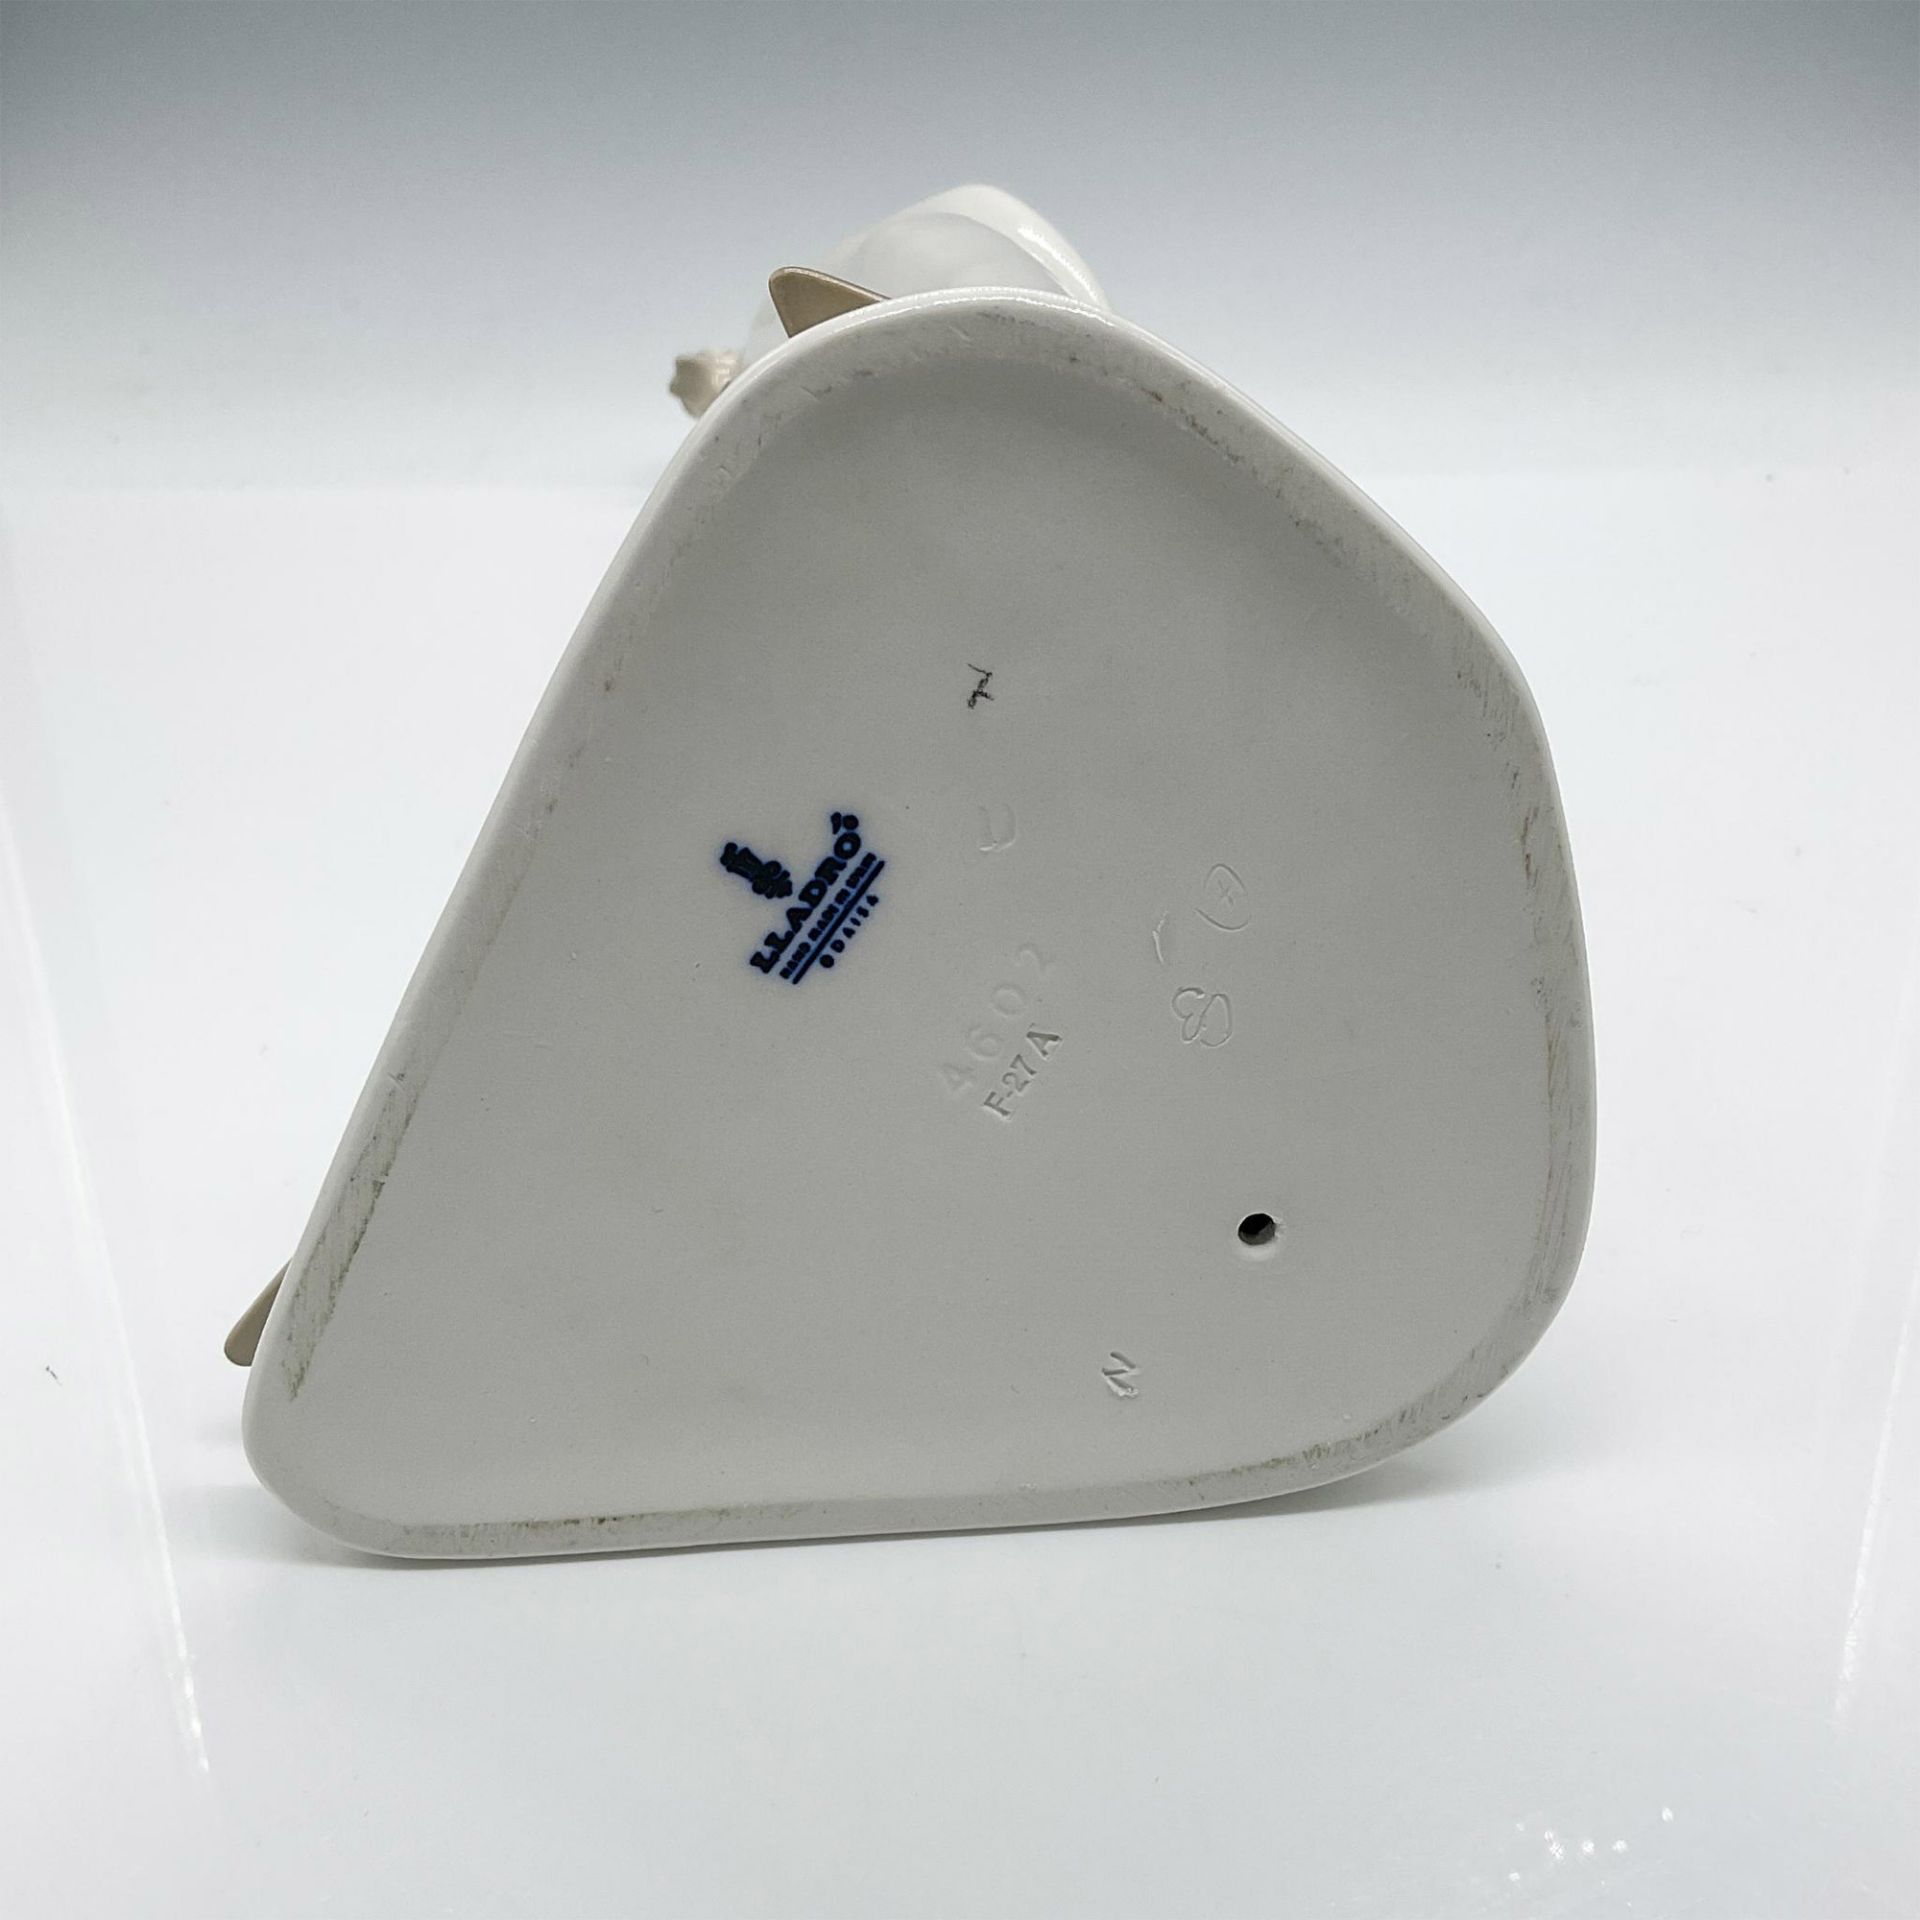 Lladro Porcelain Figurine, Doctor 1004602 - Image 4 of 4